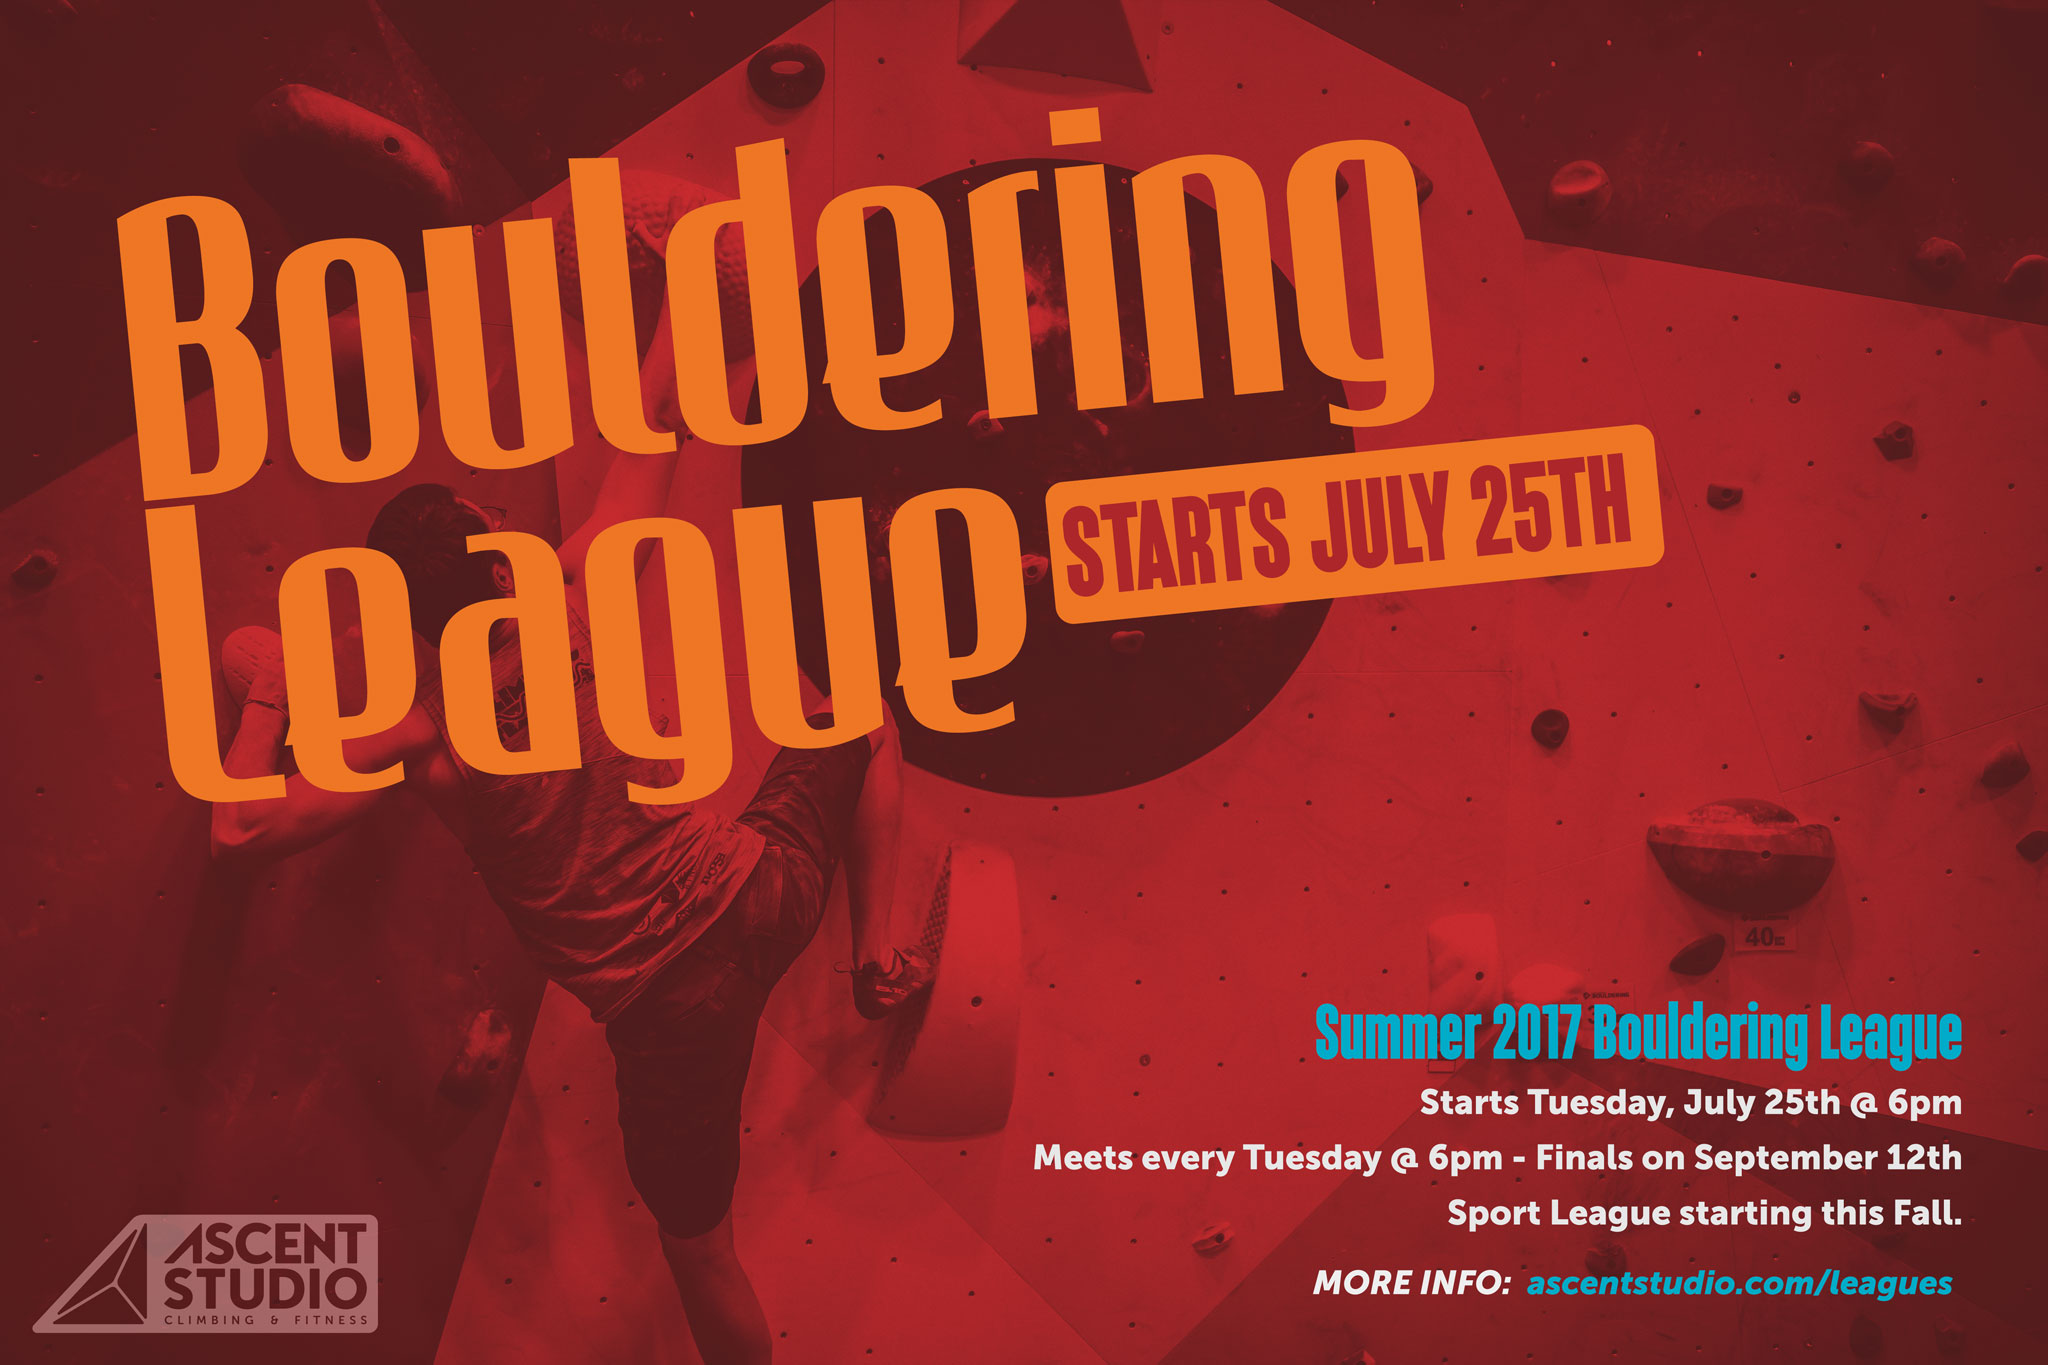 Summer Bouldering League Poster 2017